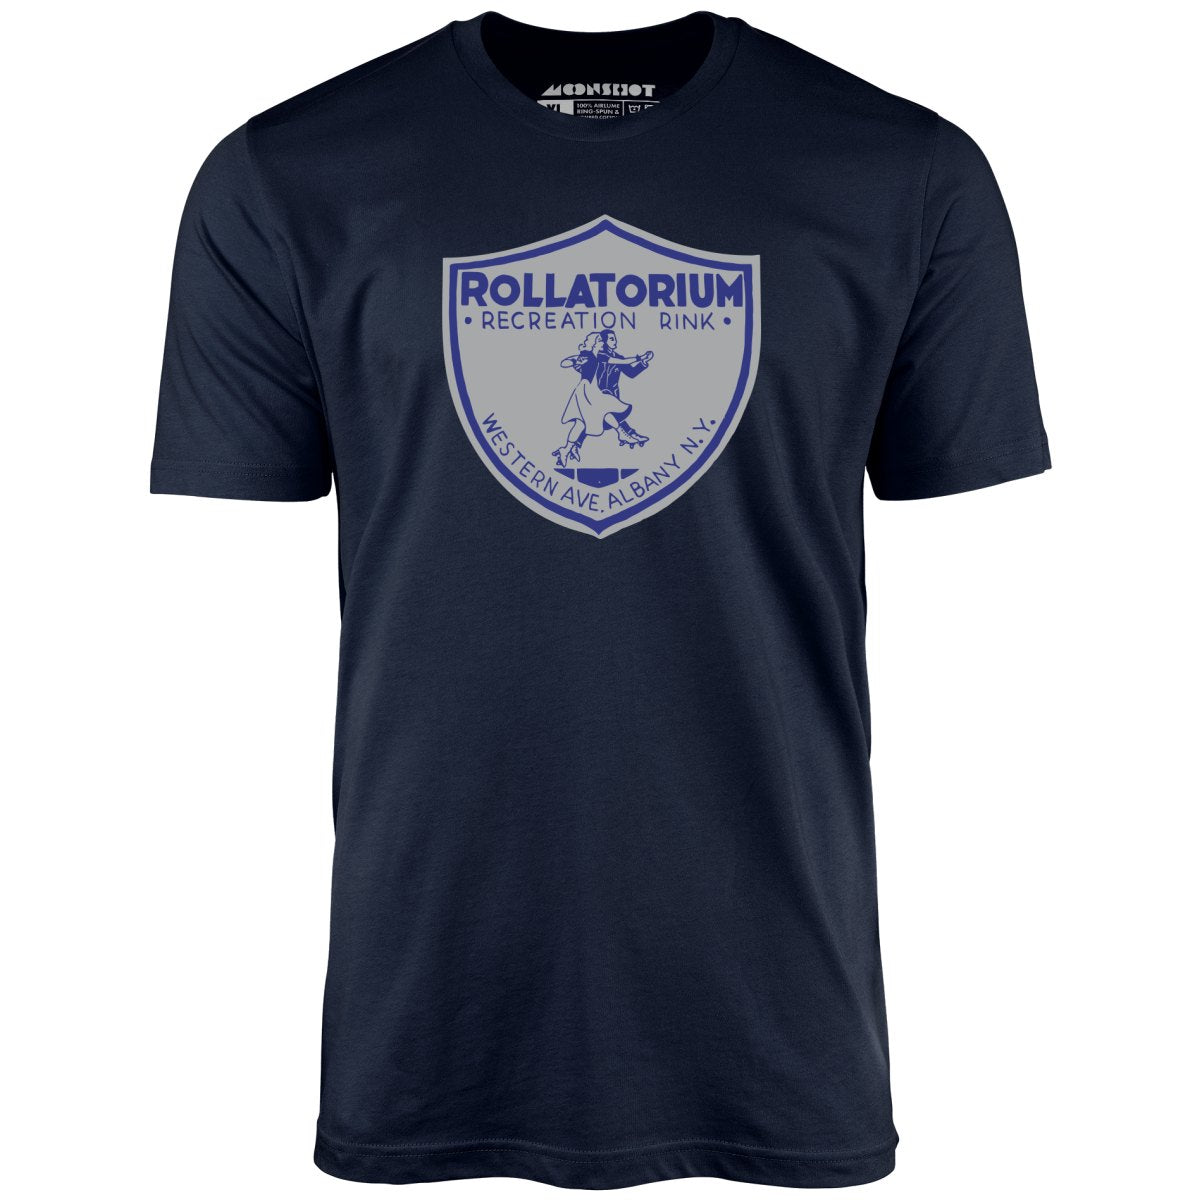 Rollatorium - Albany, NY - Vintage Roller Rink - Unisex T-Shirt